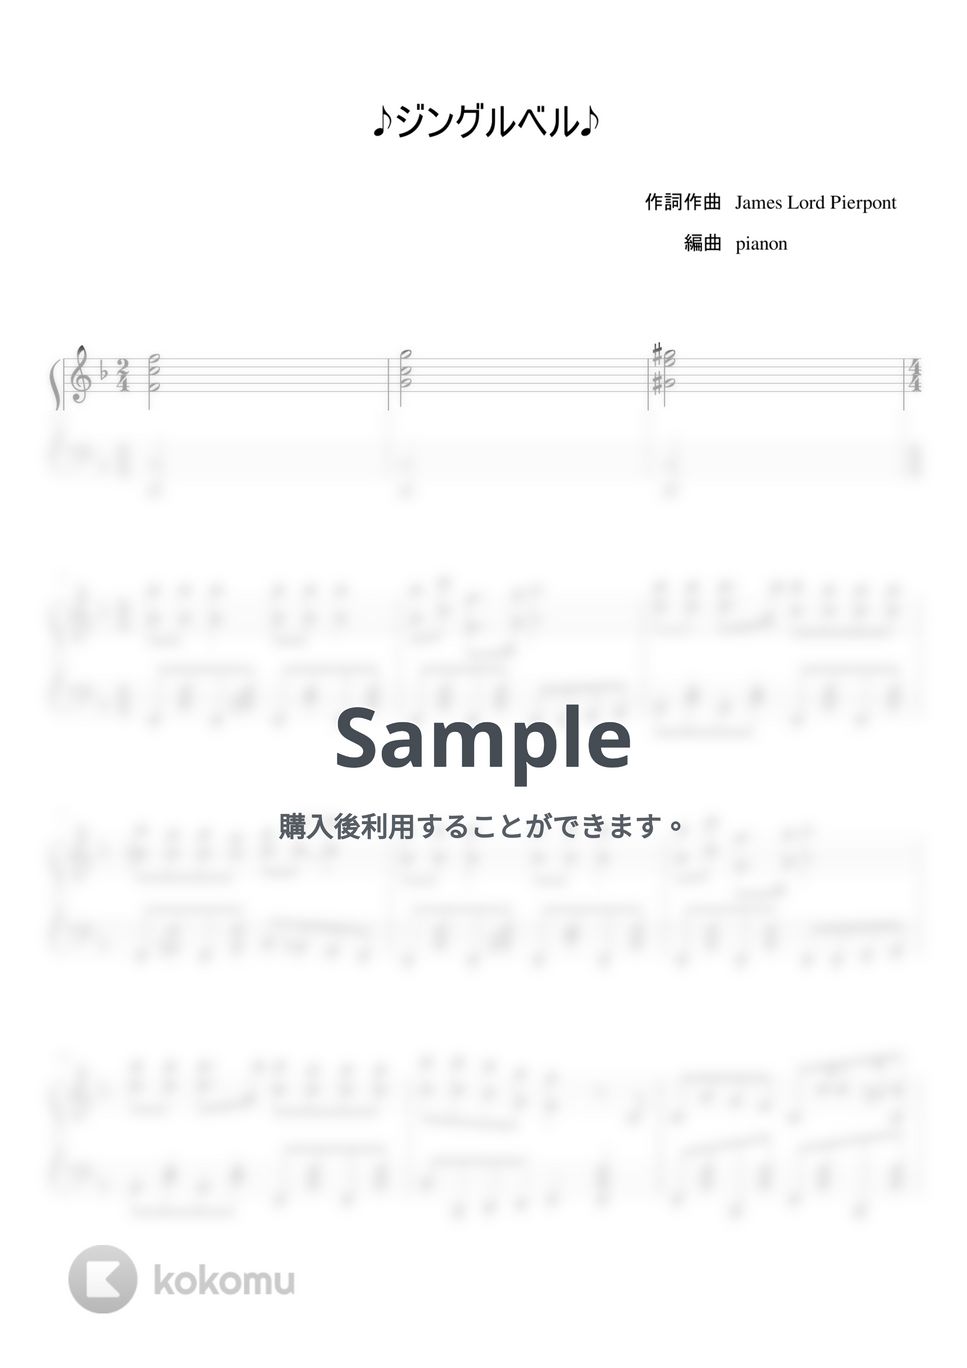 James Lord Pierpont - ジングルベル (ピアノソロ上級) by pianon